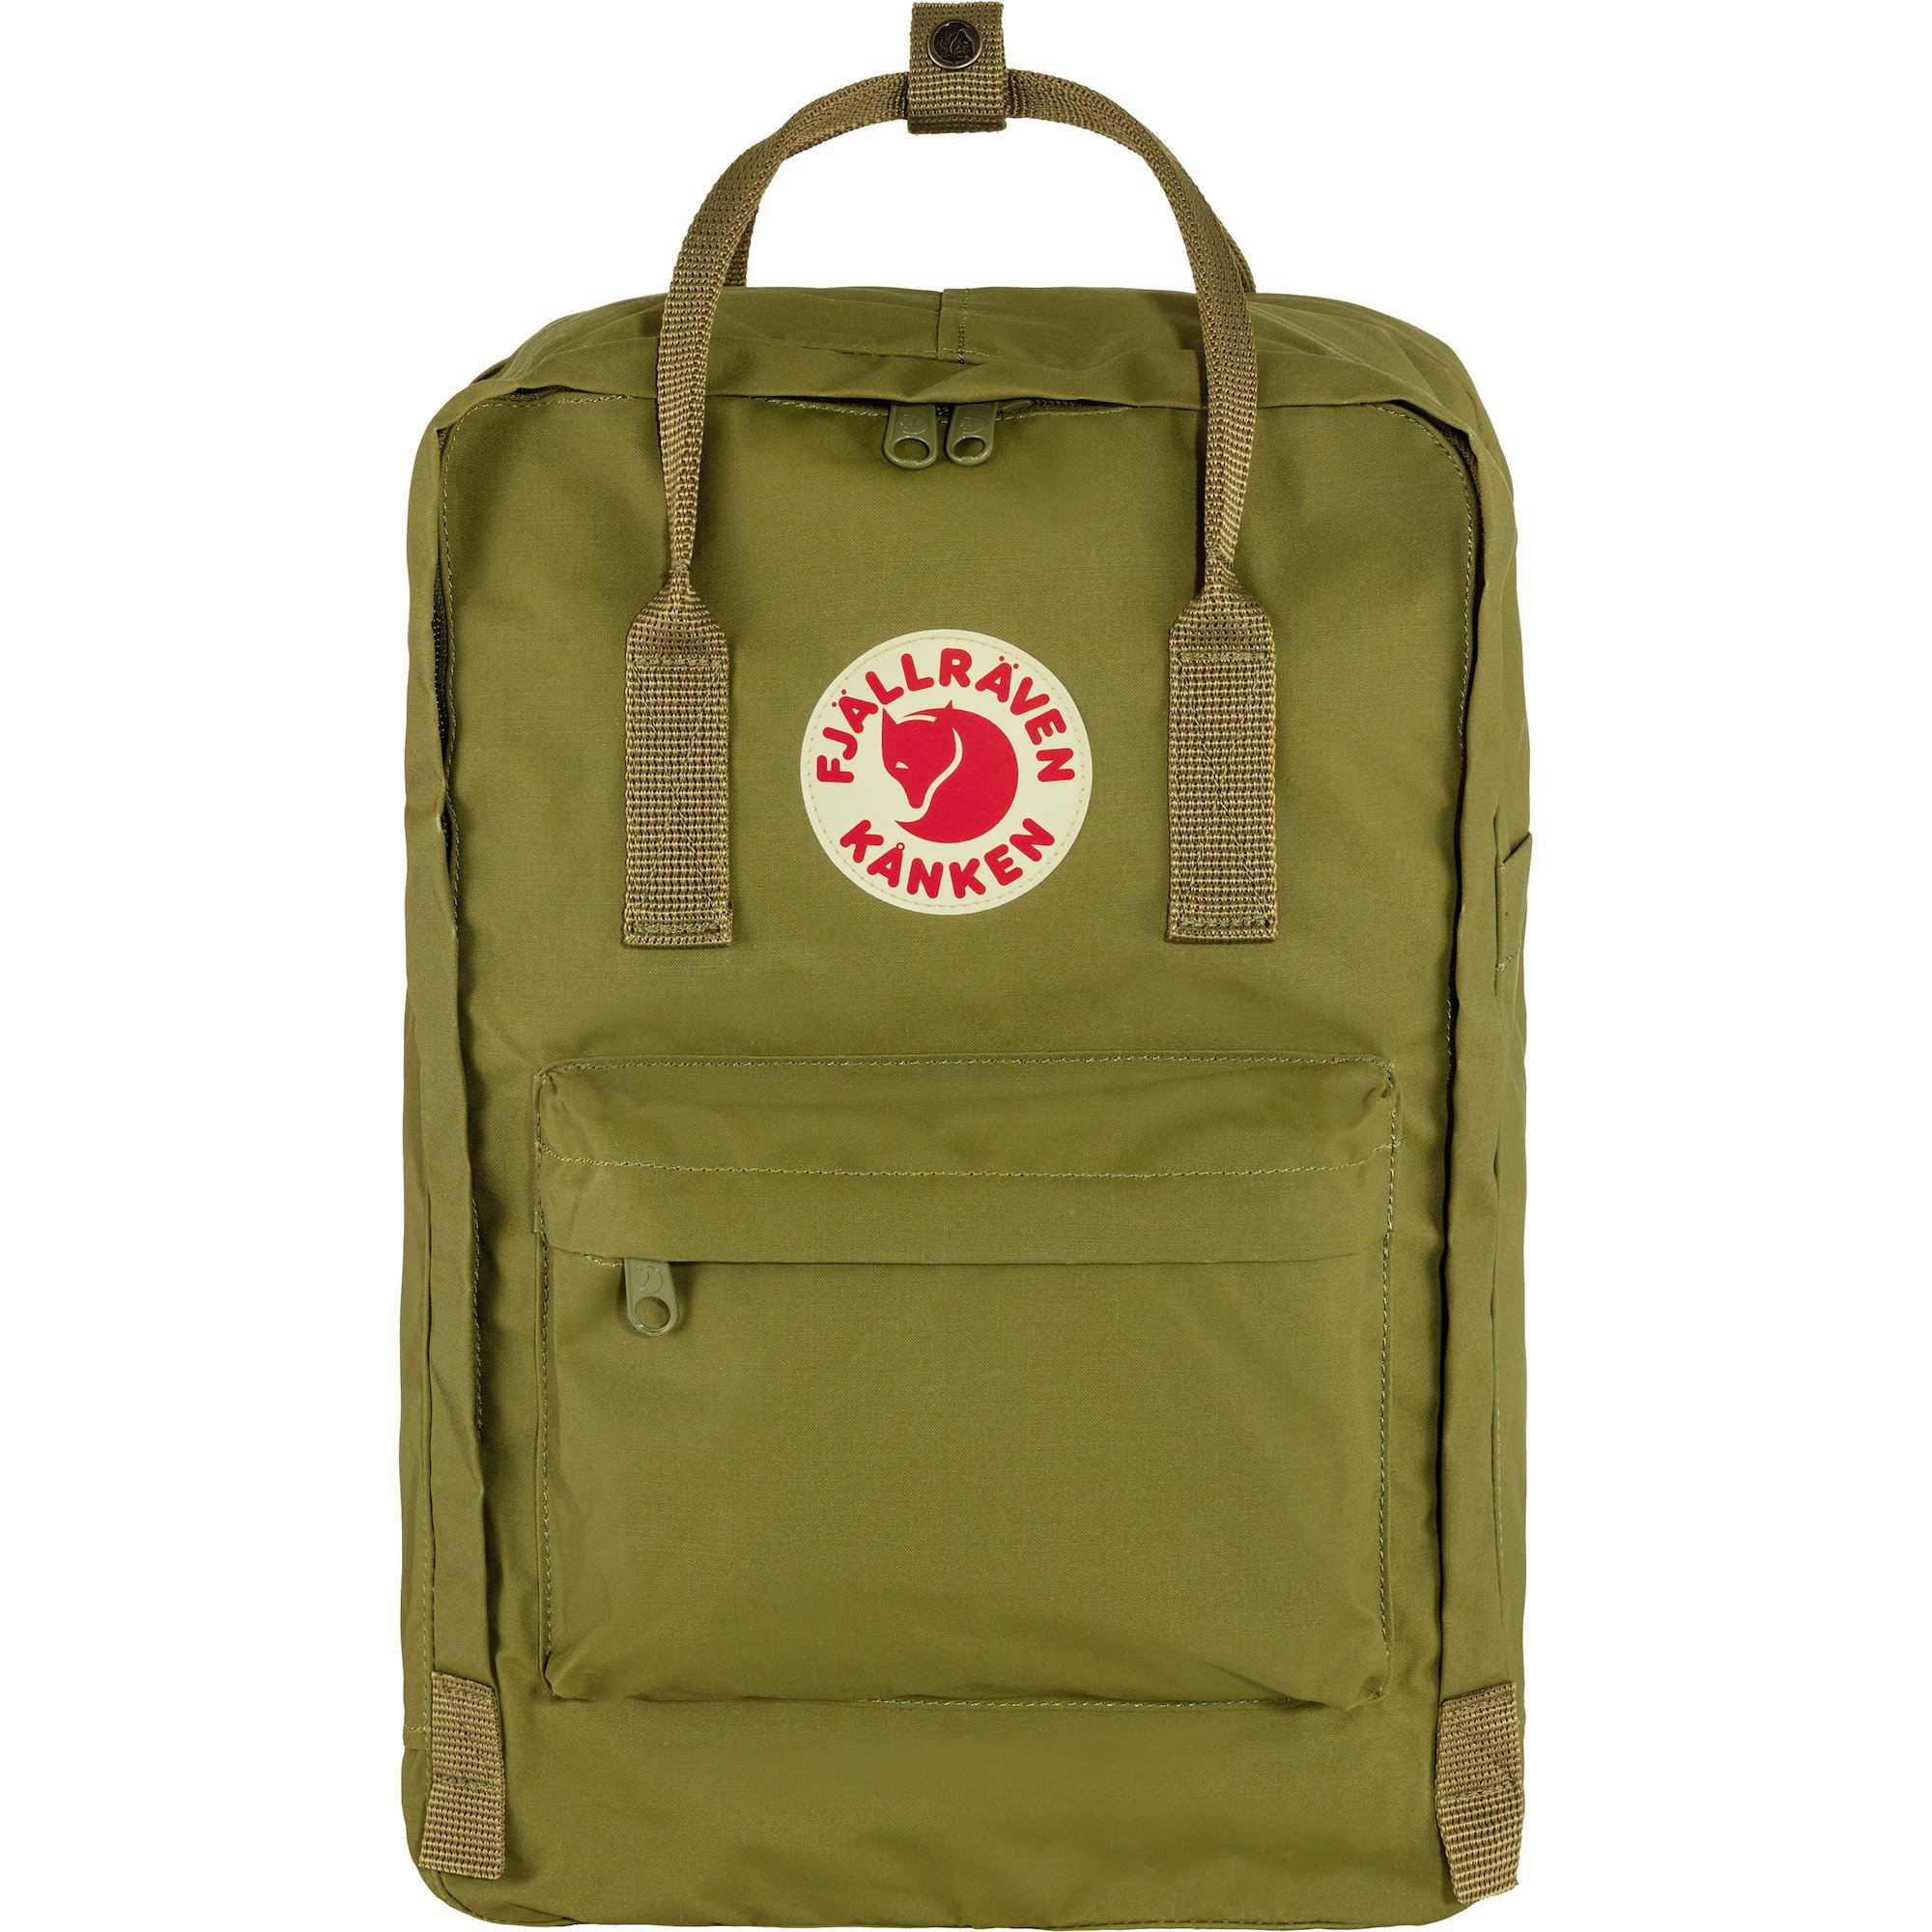 Shop Official Kanken Backpacks and Bags | Fjallraven US مسلك بالوعات